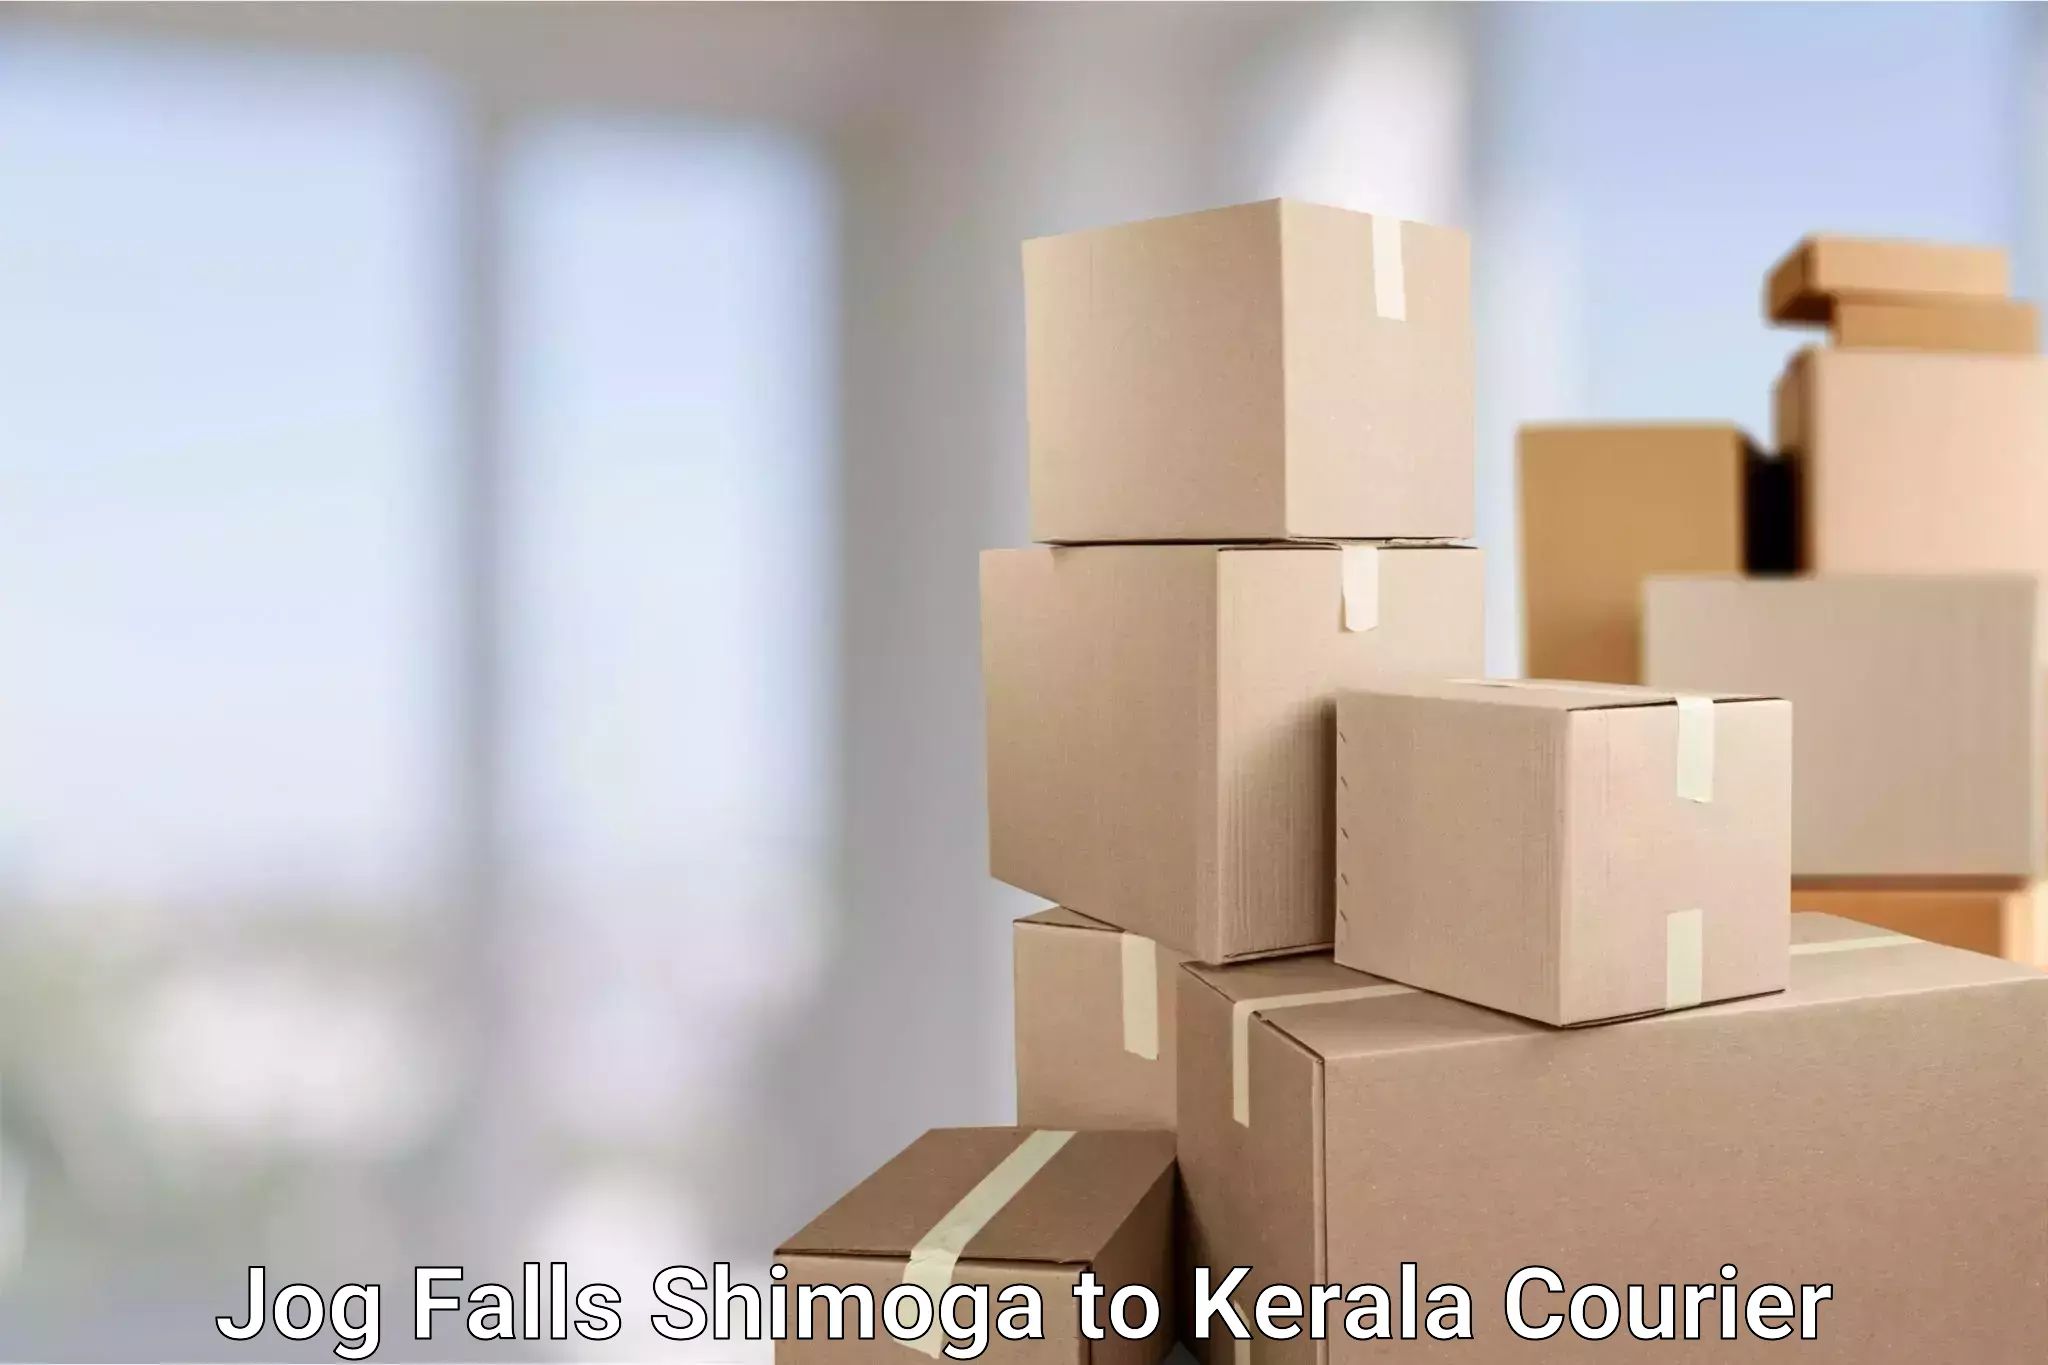 Express postal services Jog Falls Shimoga to Kerala